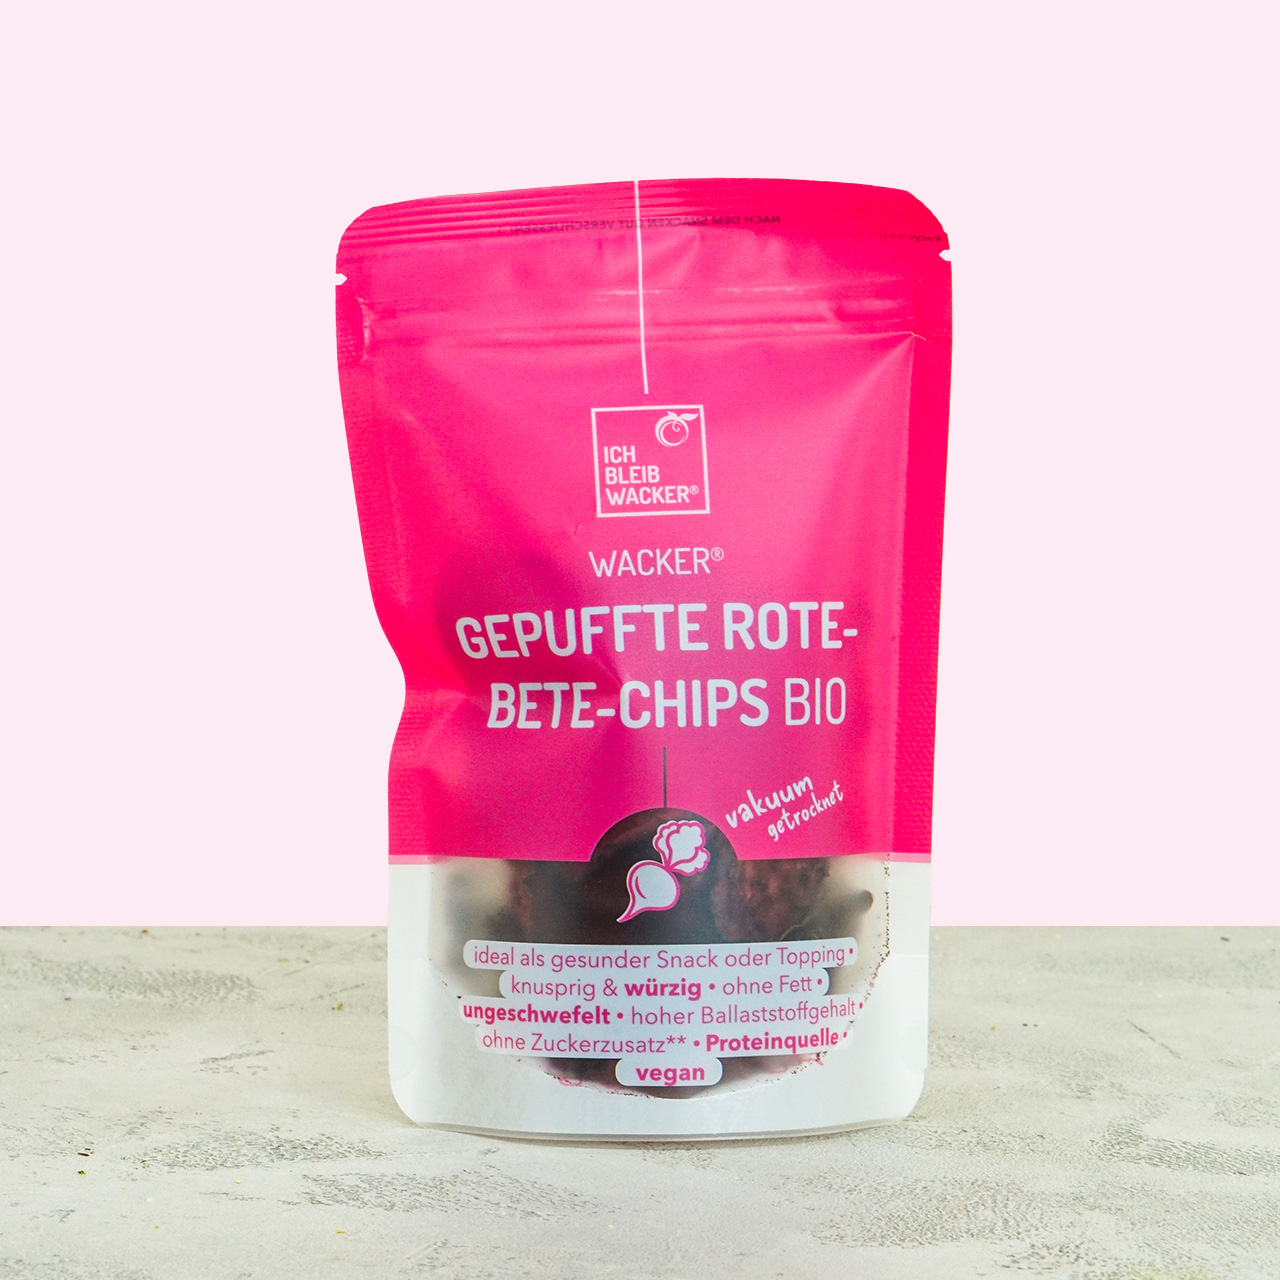 Gepuffte Rote-Bete-Chips Bio